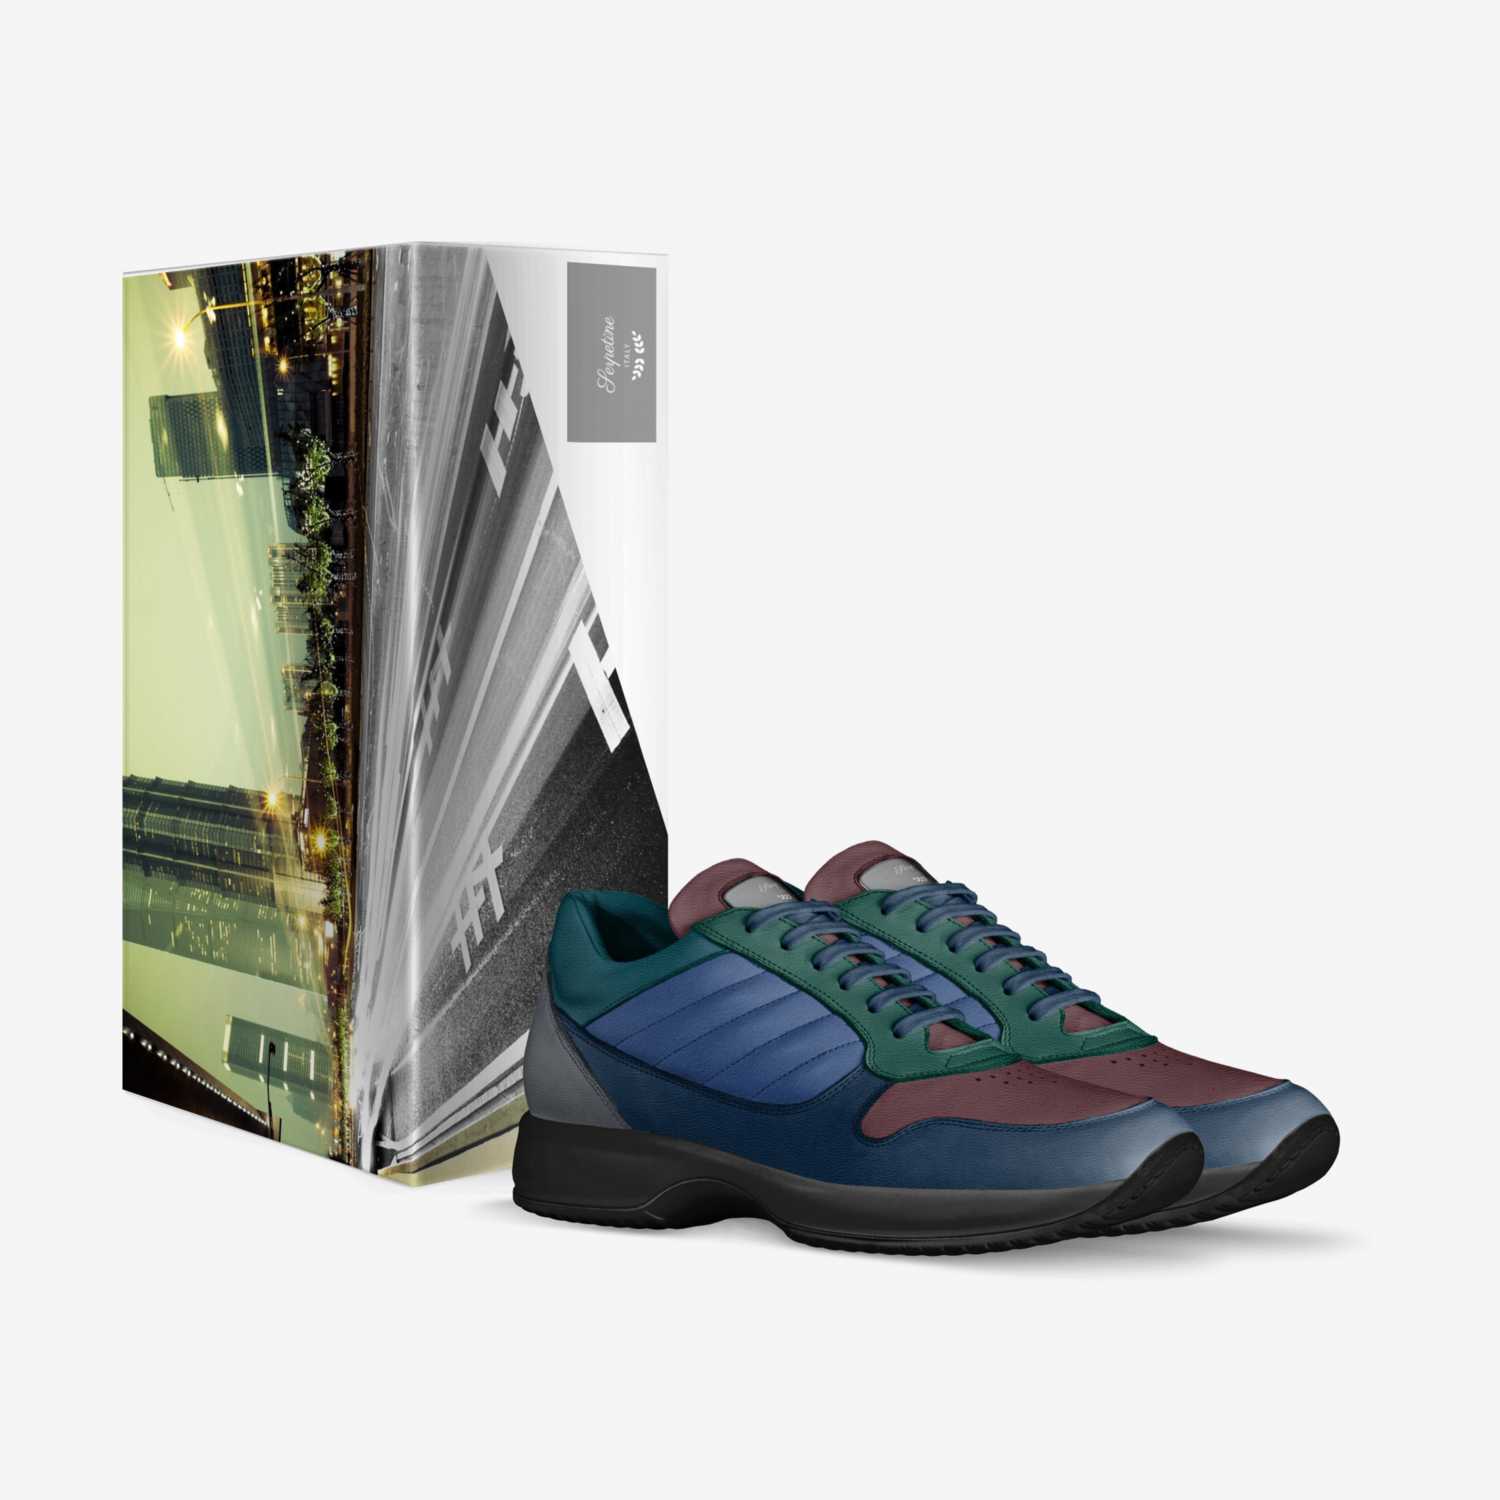 Serpetine custom made in Italy shoes by Gavin Koch Scott | Box view